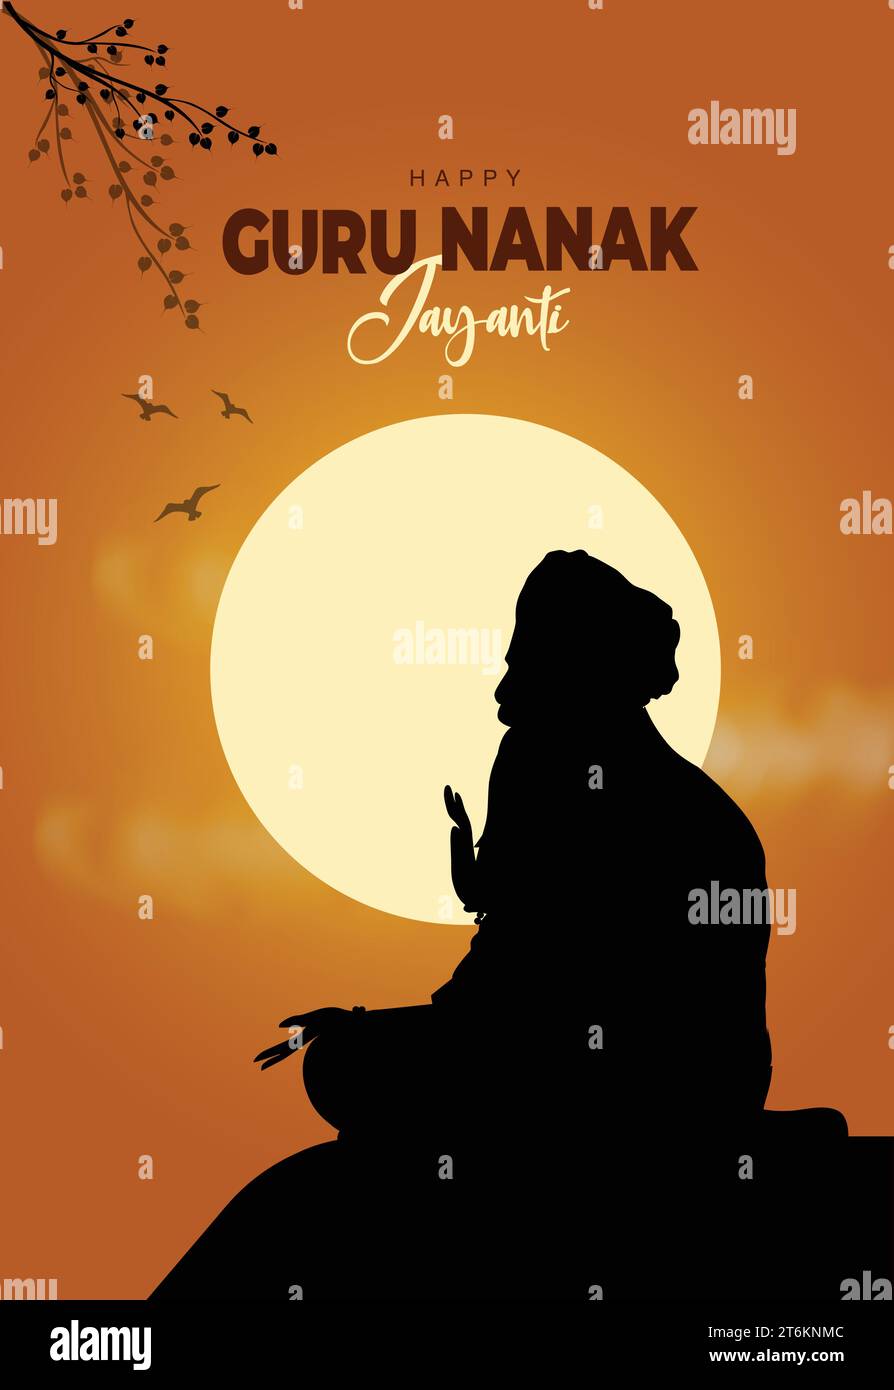 happy Guru Nanak Jayanti festival greeting card design. India Hindu Sikh celebrating birthday of Guru Nanak Dev. abstract vector illustration. Stock Vector